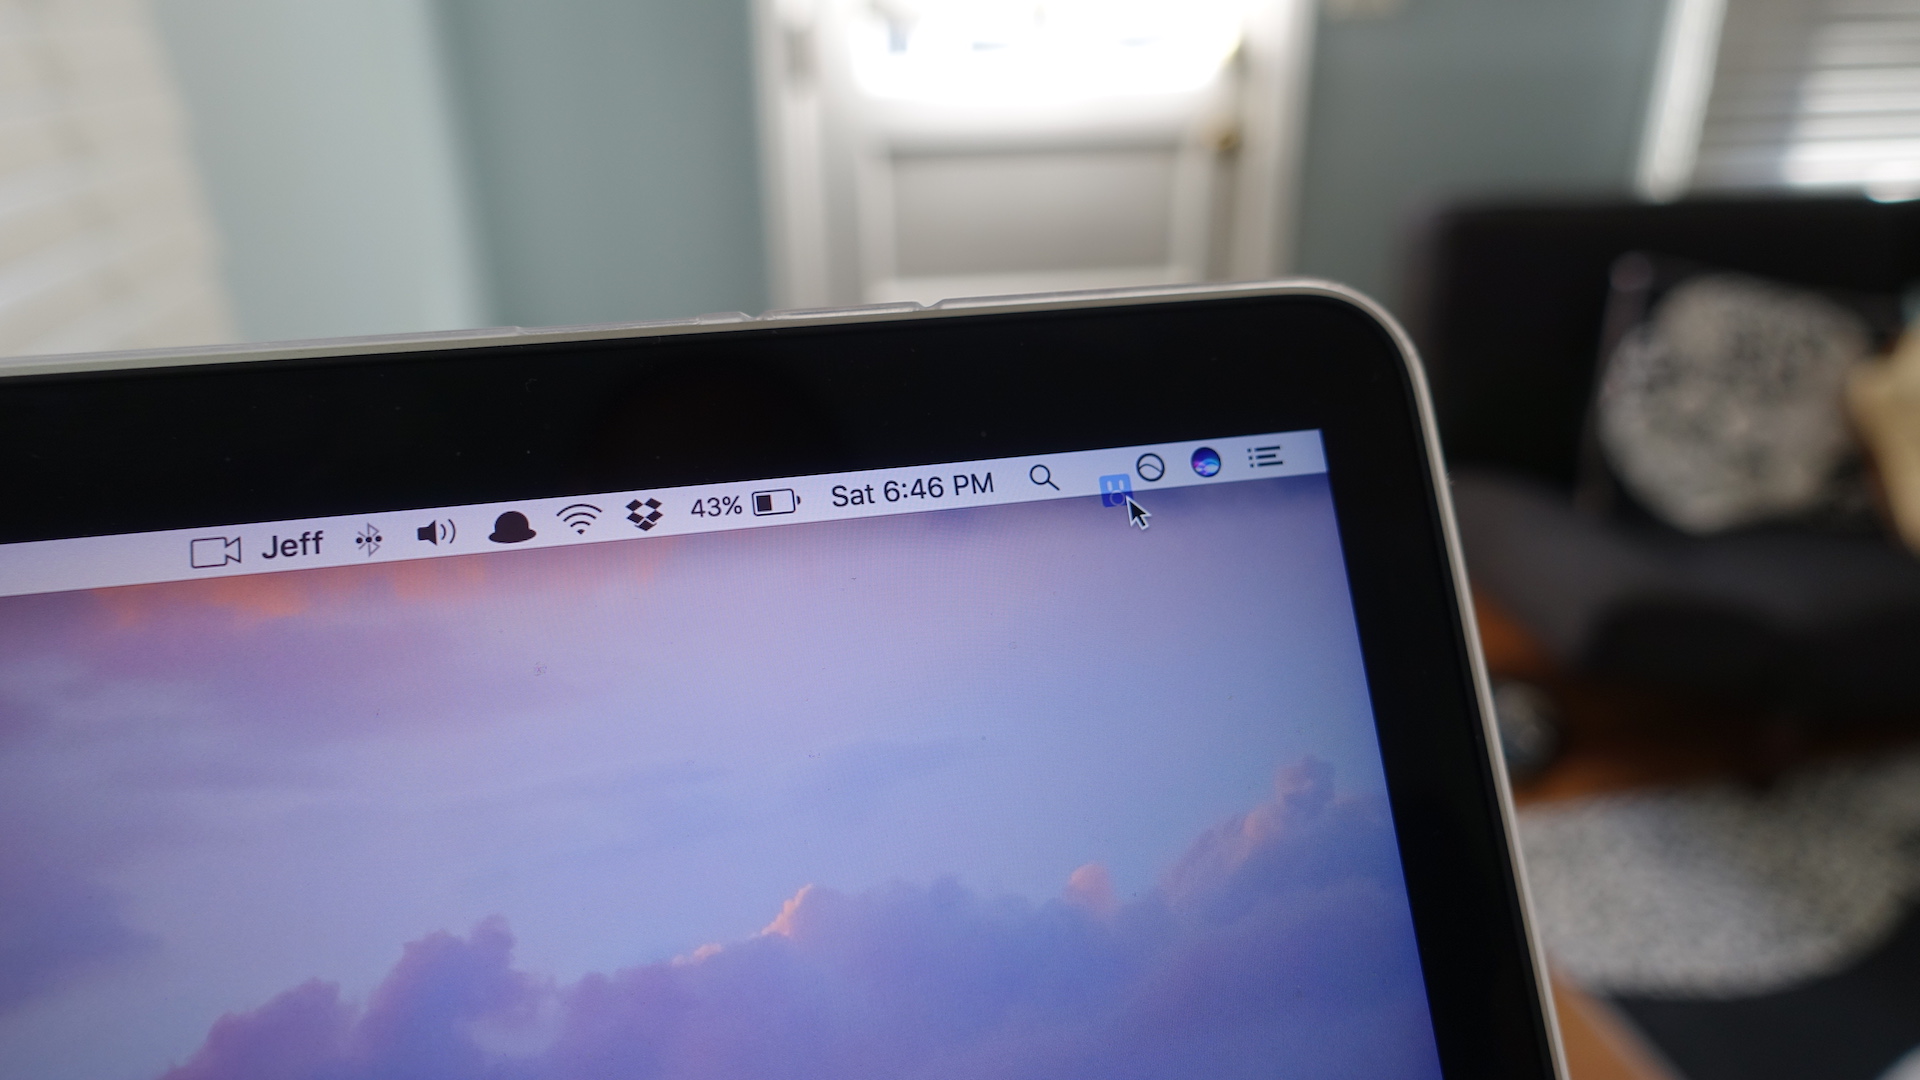 Rearrange menu bar icons macOS Sierra